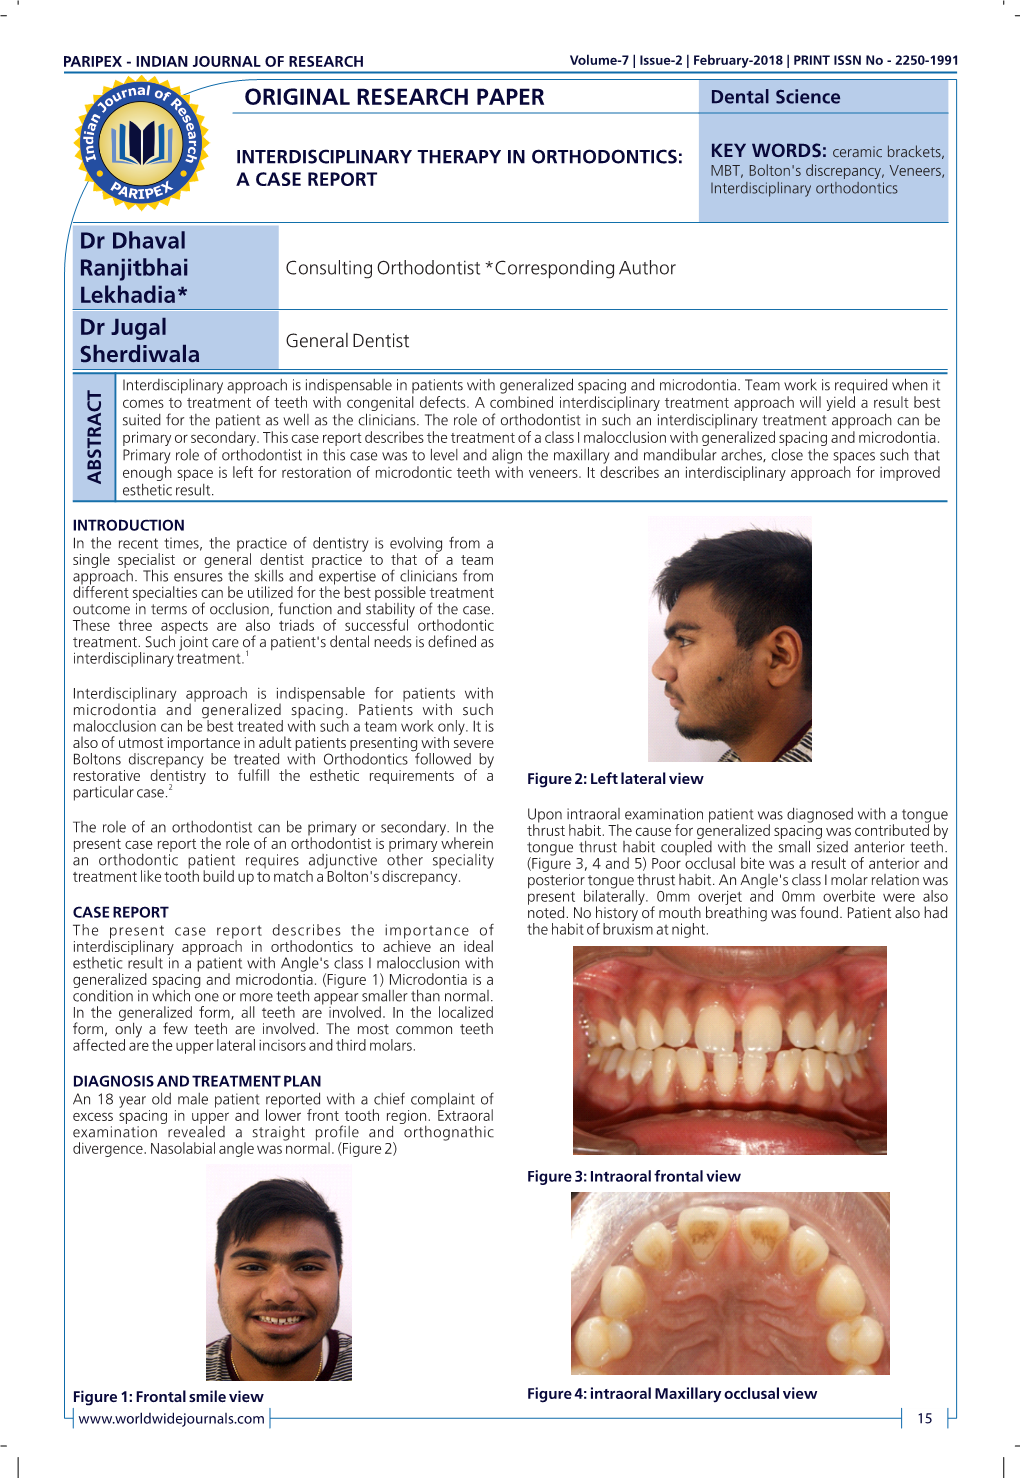 Interdisciplinary Therapy in Orthodontics: a Case Report